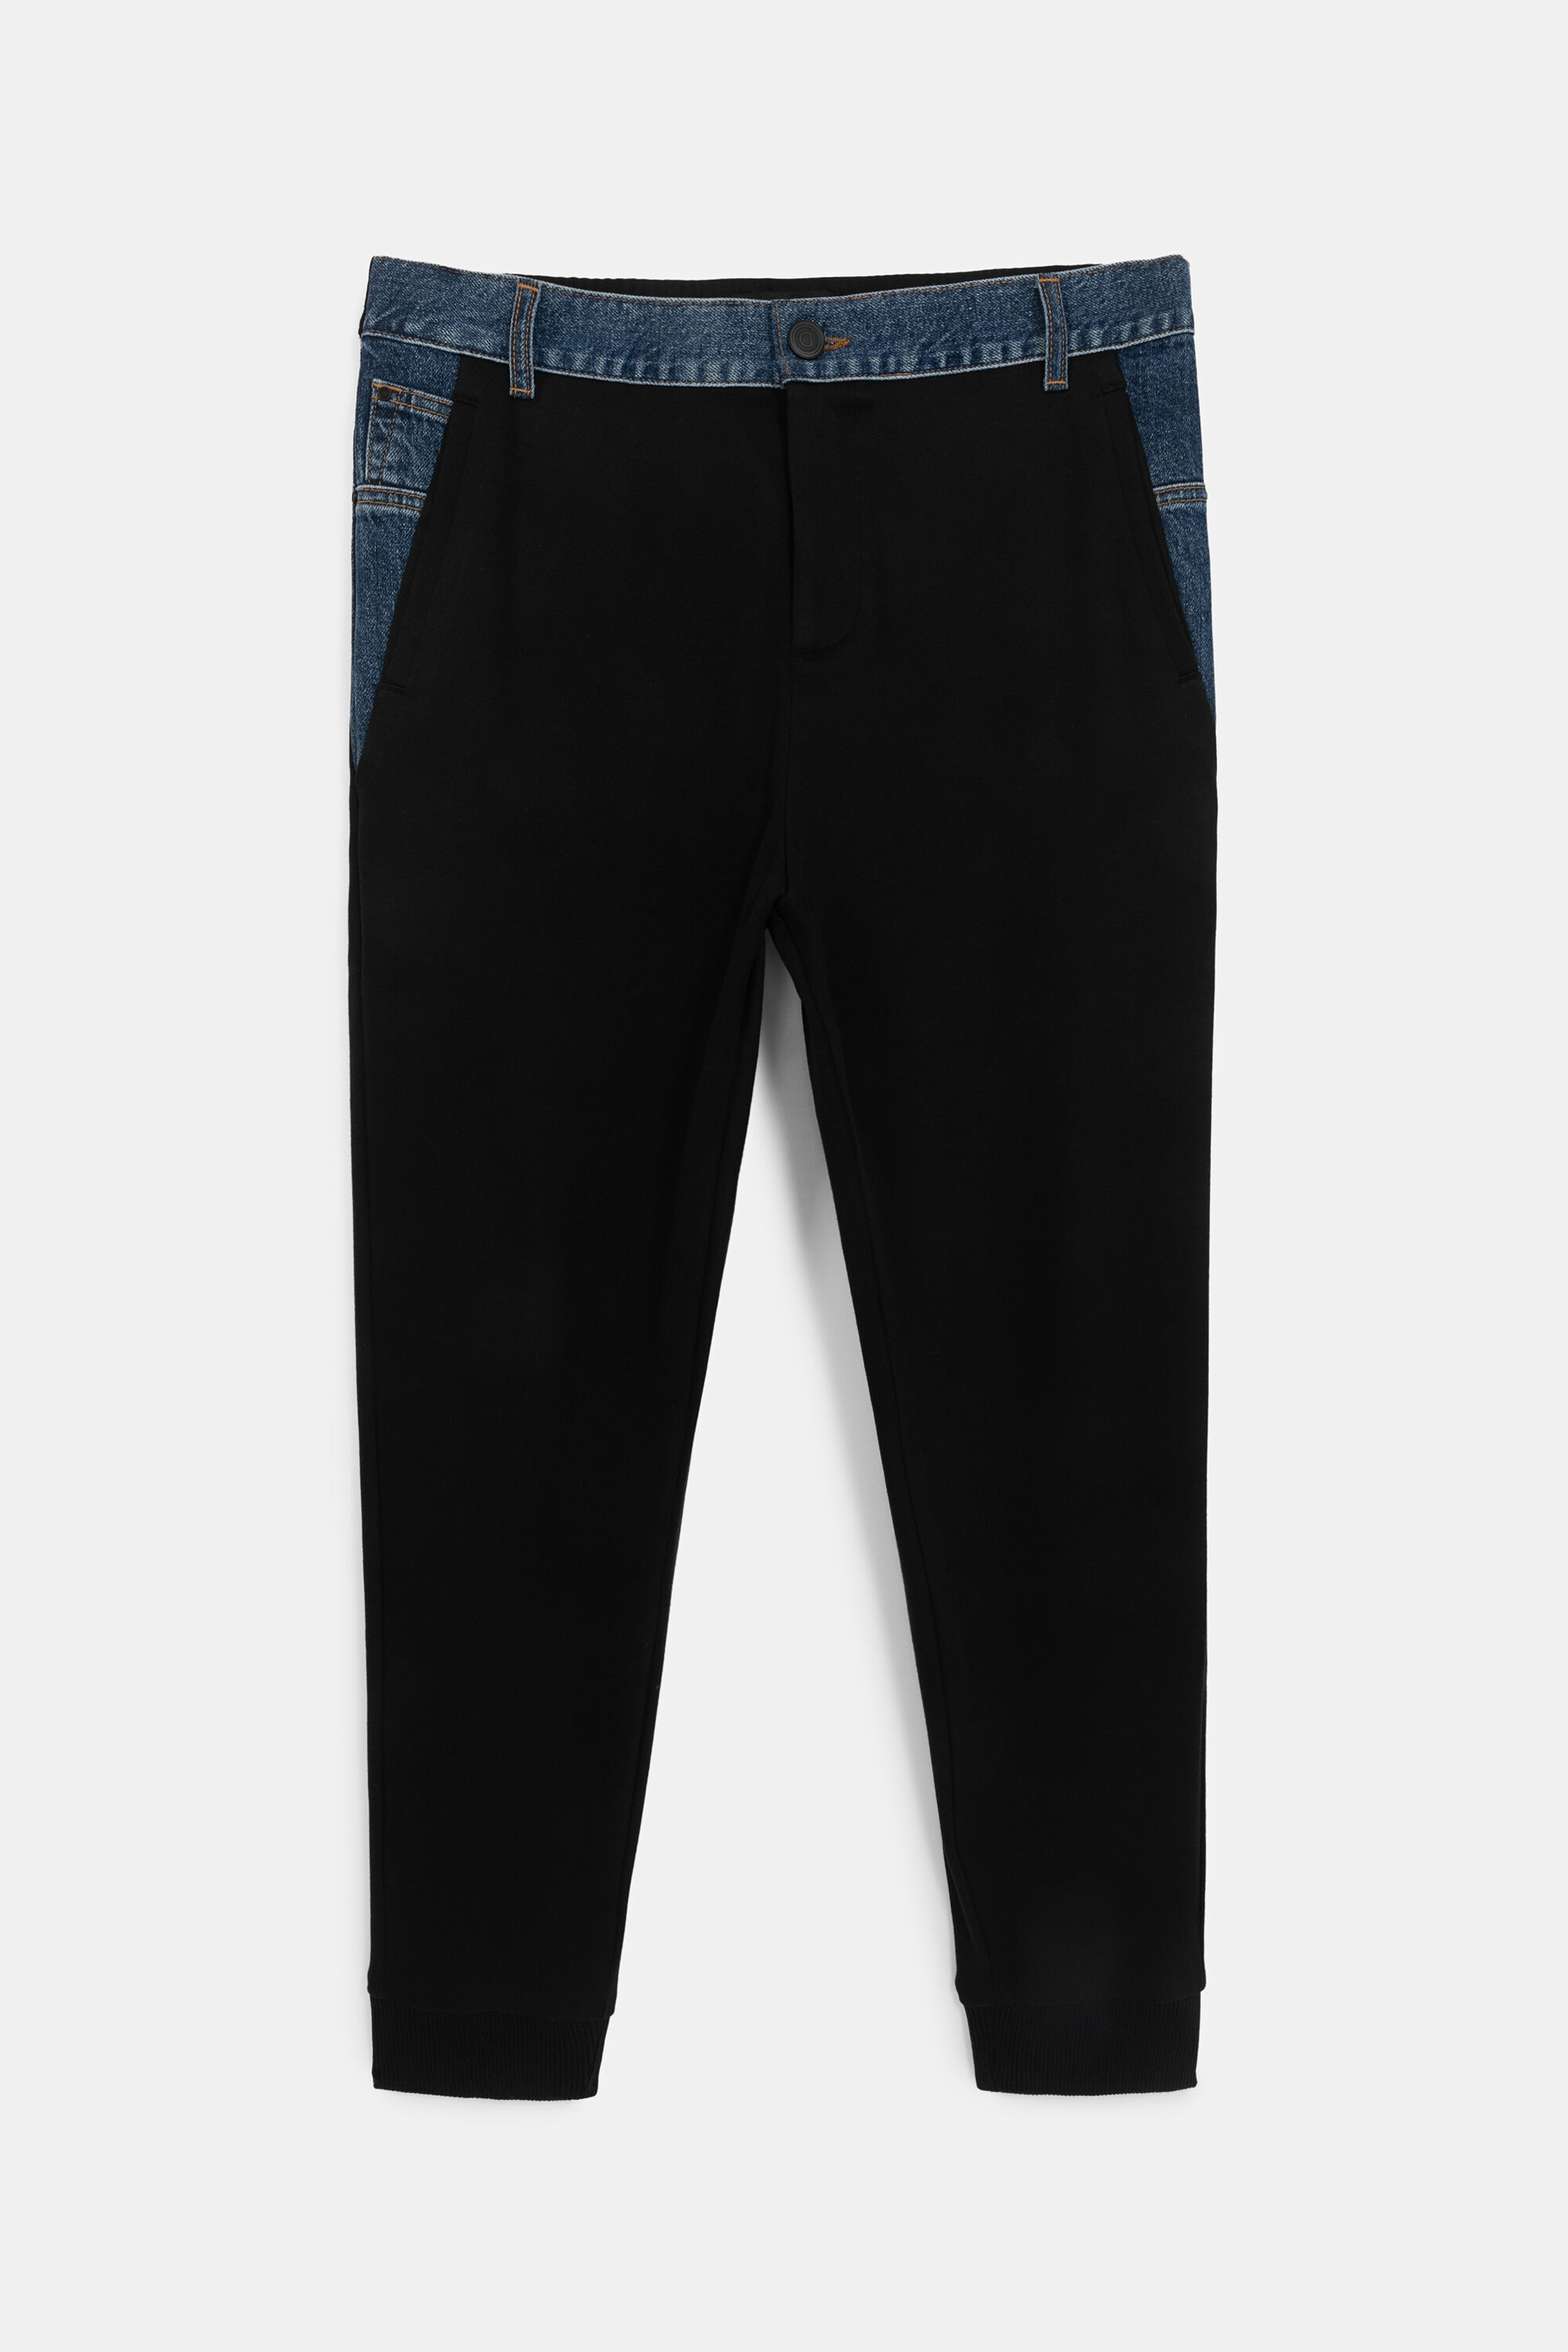 Desigual Jogging Trousers Plush Denim In Black